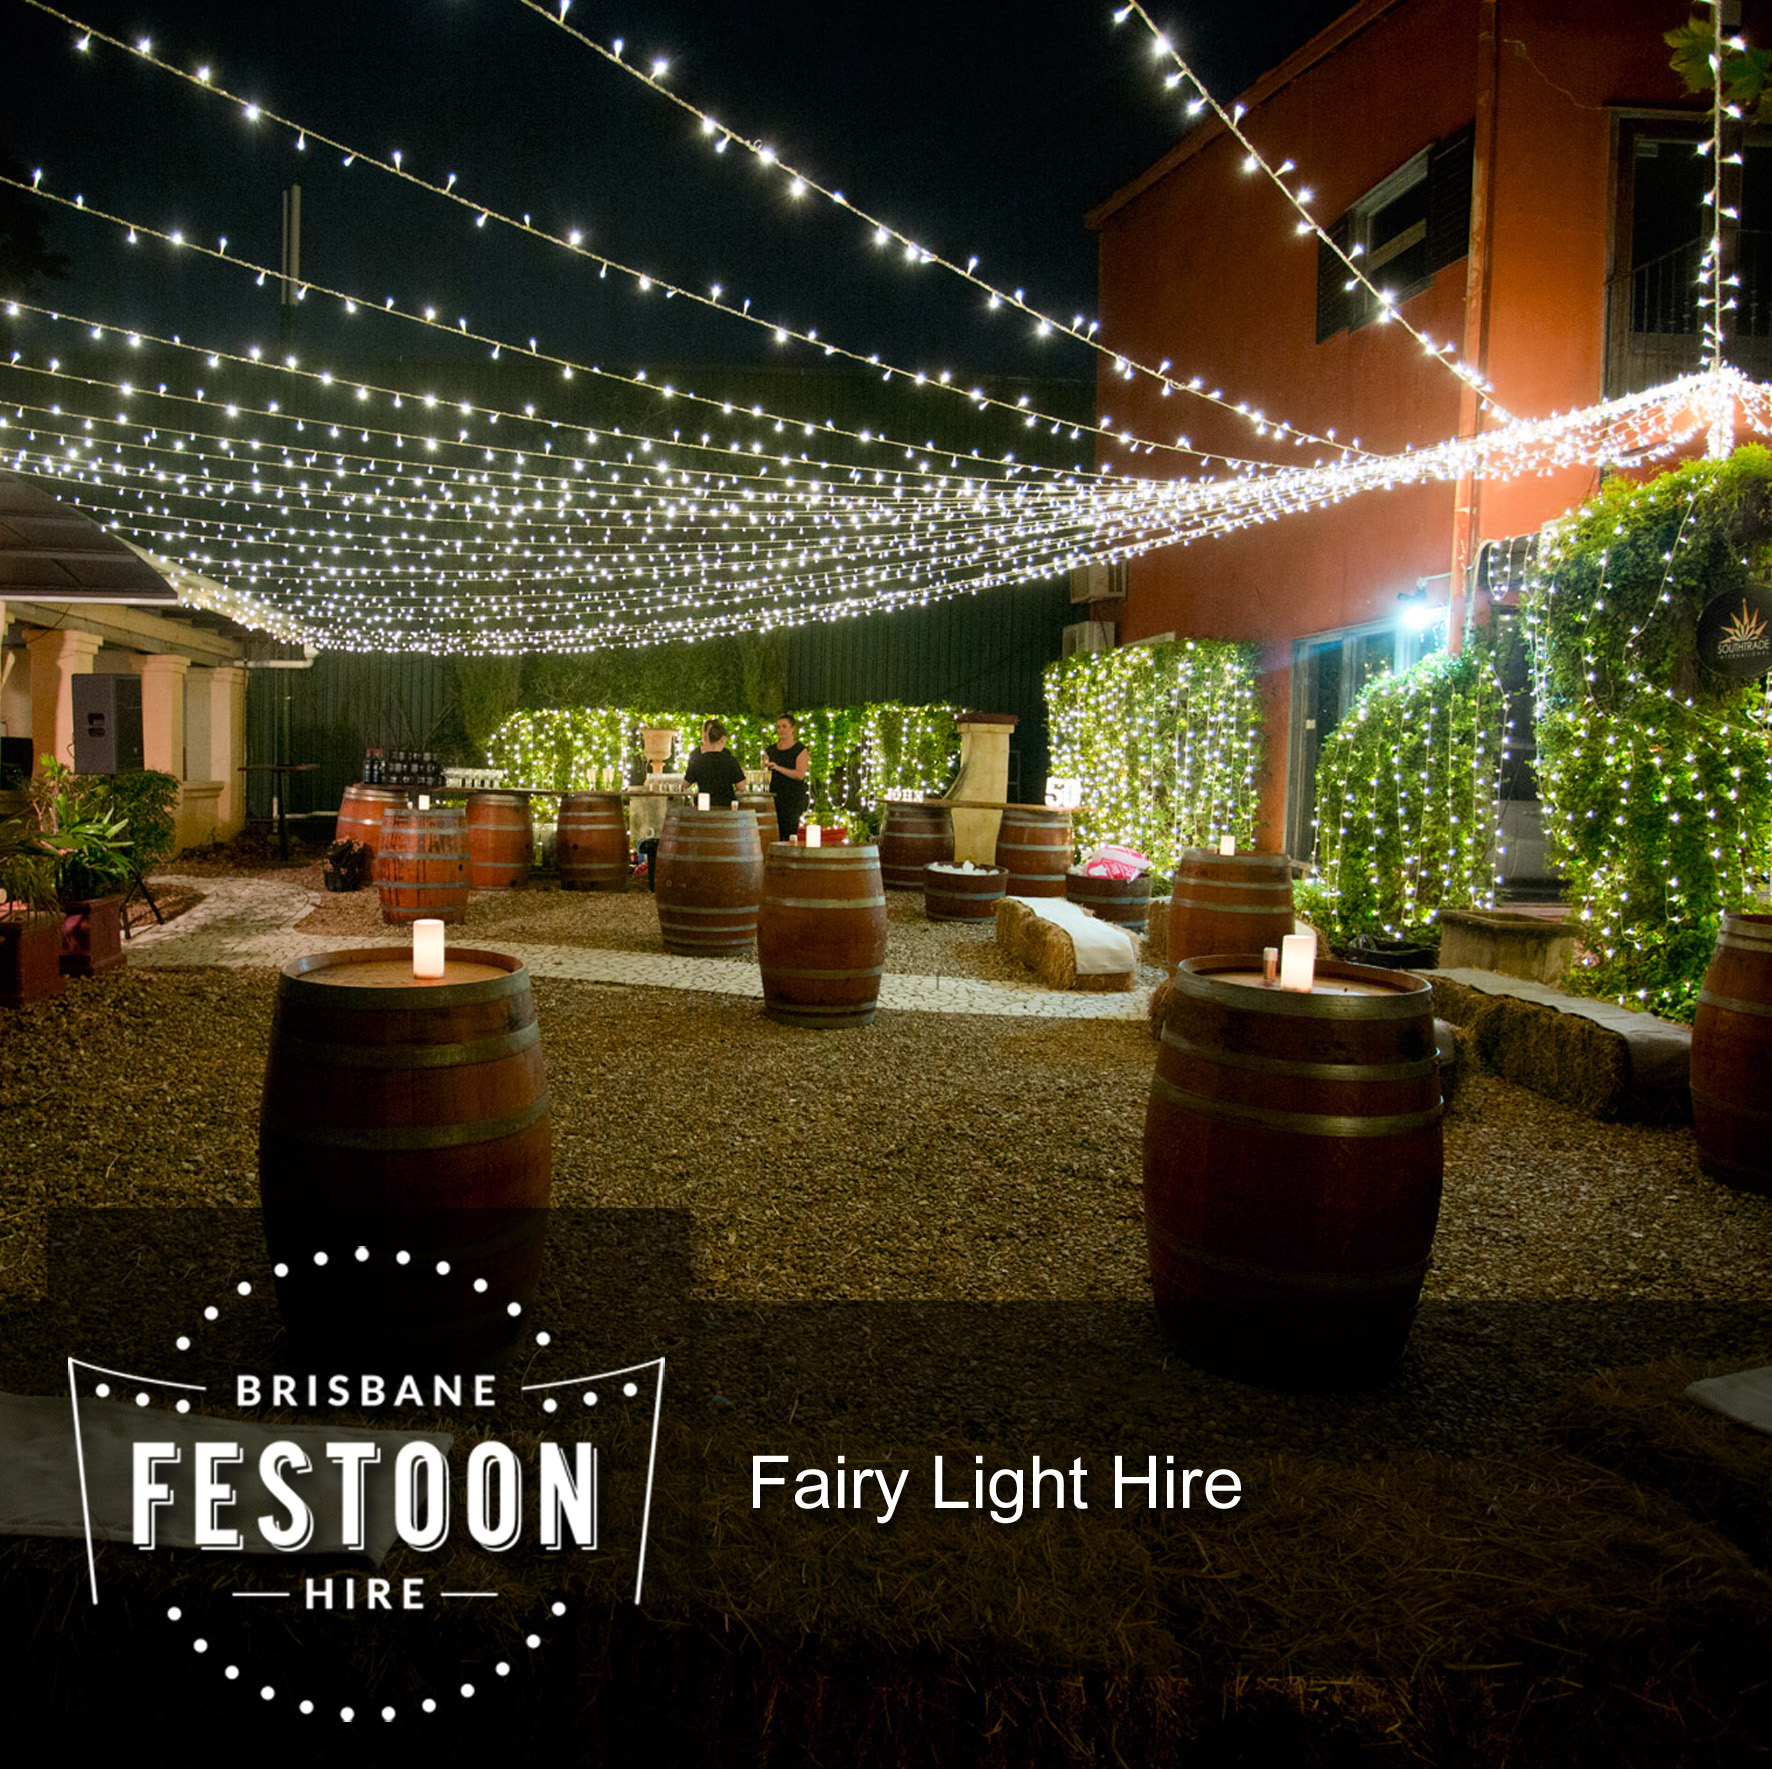 Brisbane Festoon Hire - Fairy Light Hire 3.jpg